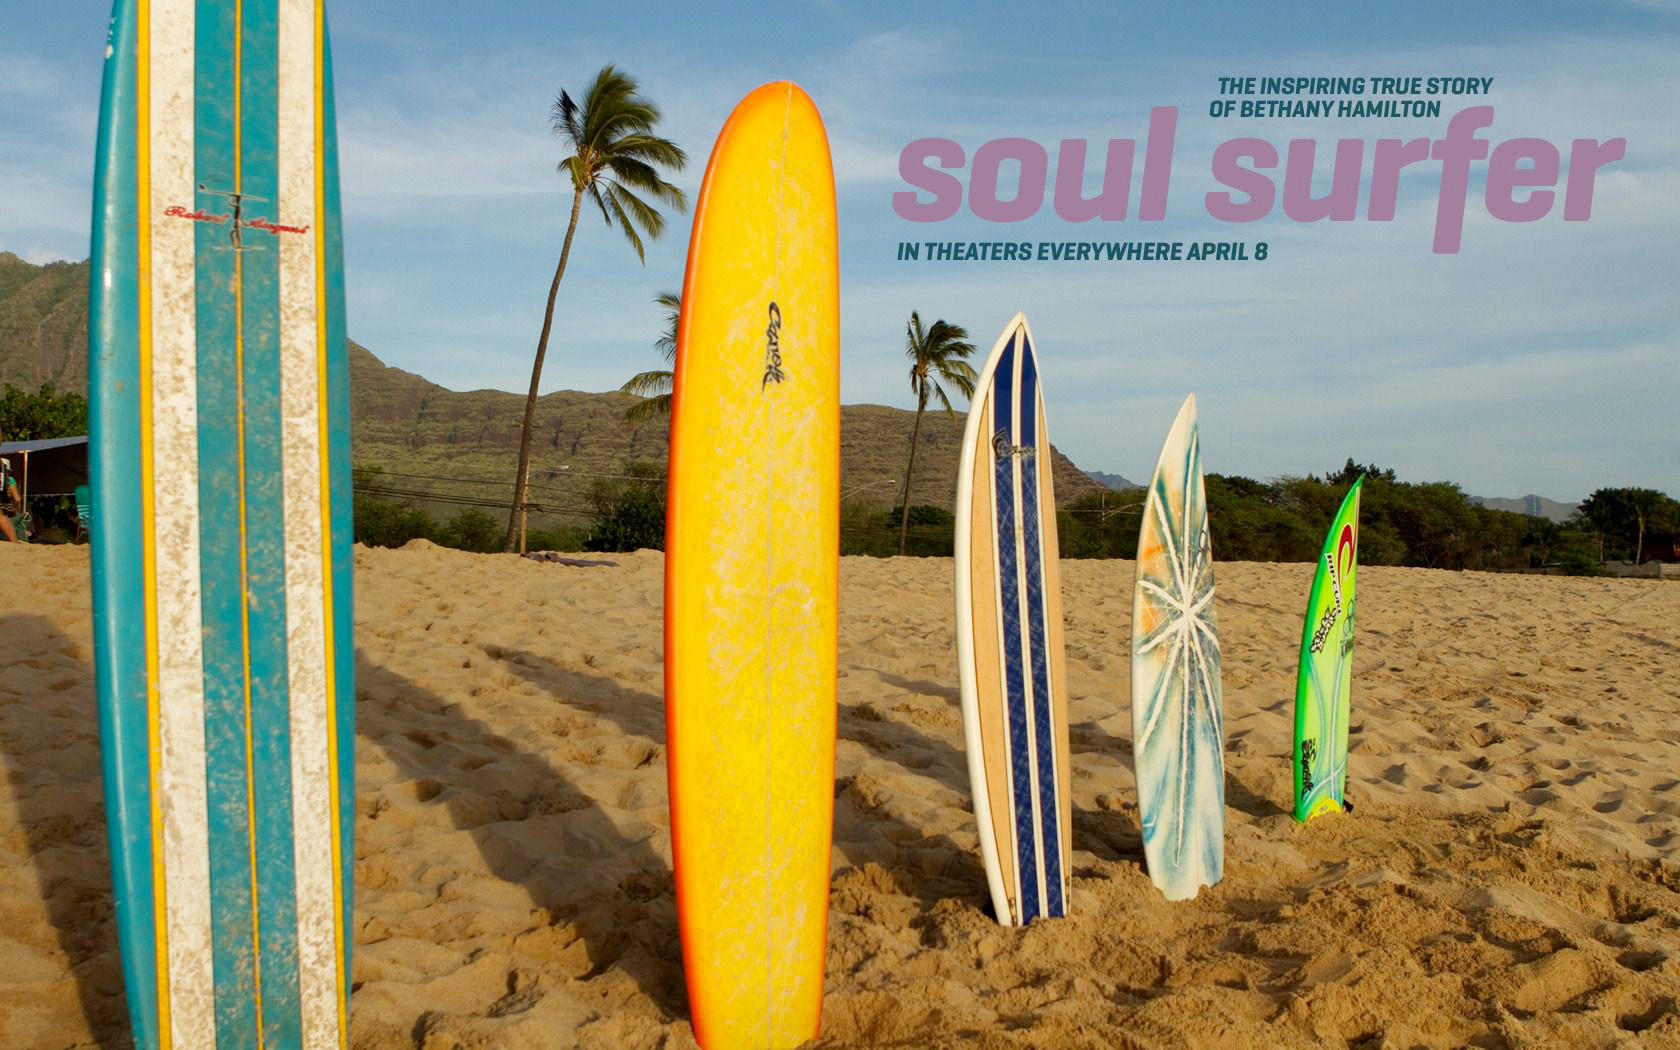 Poster of TriStar Pictures' Soul Surfer (2011)